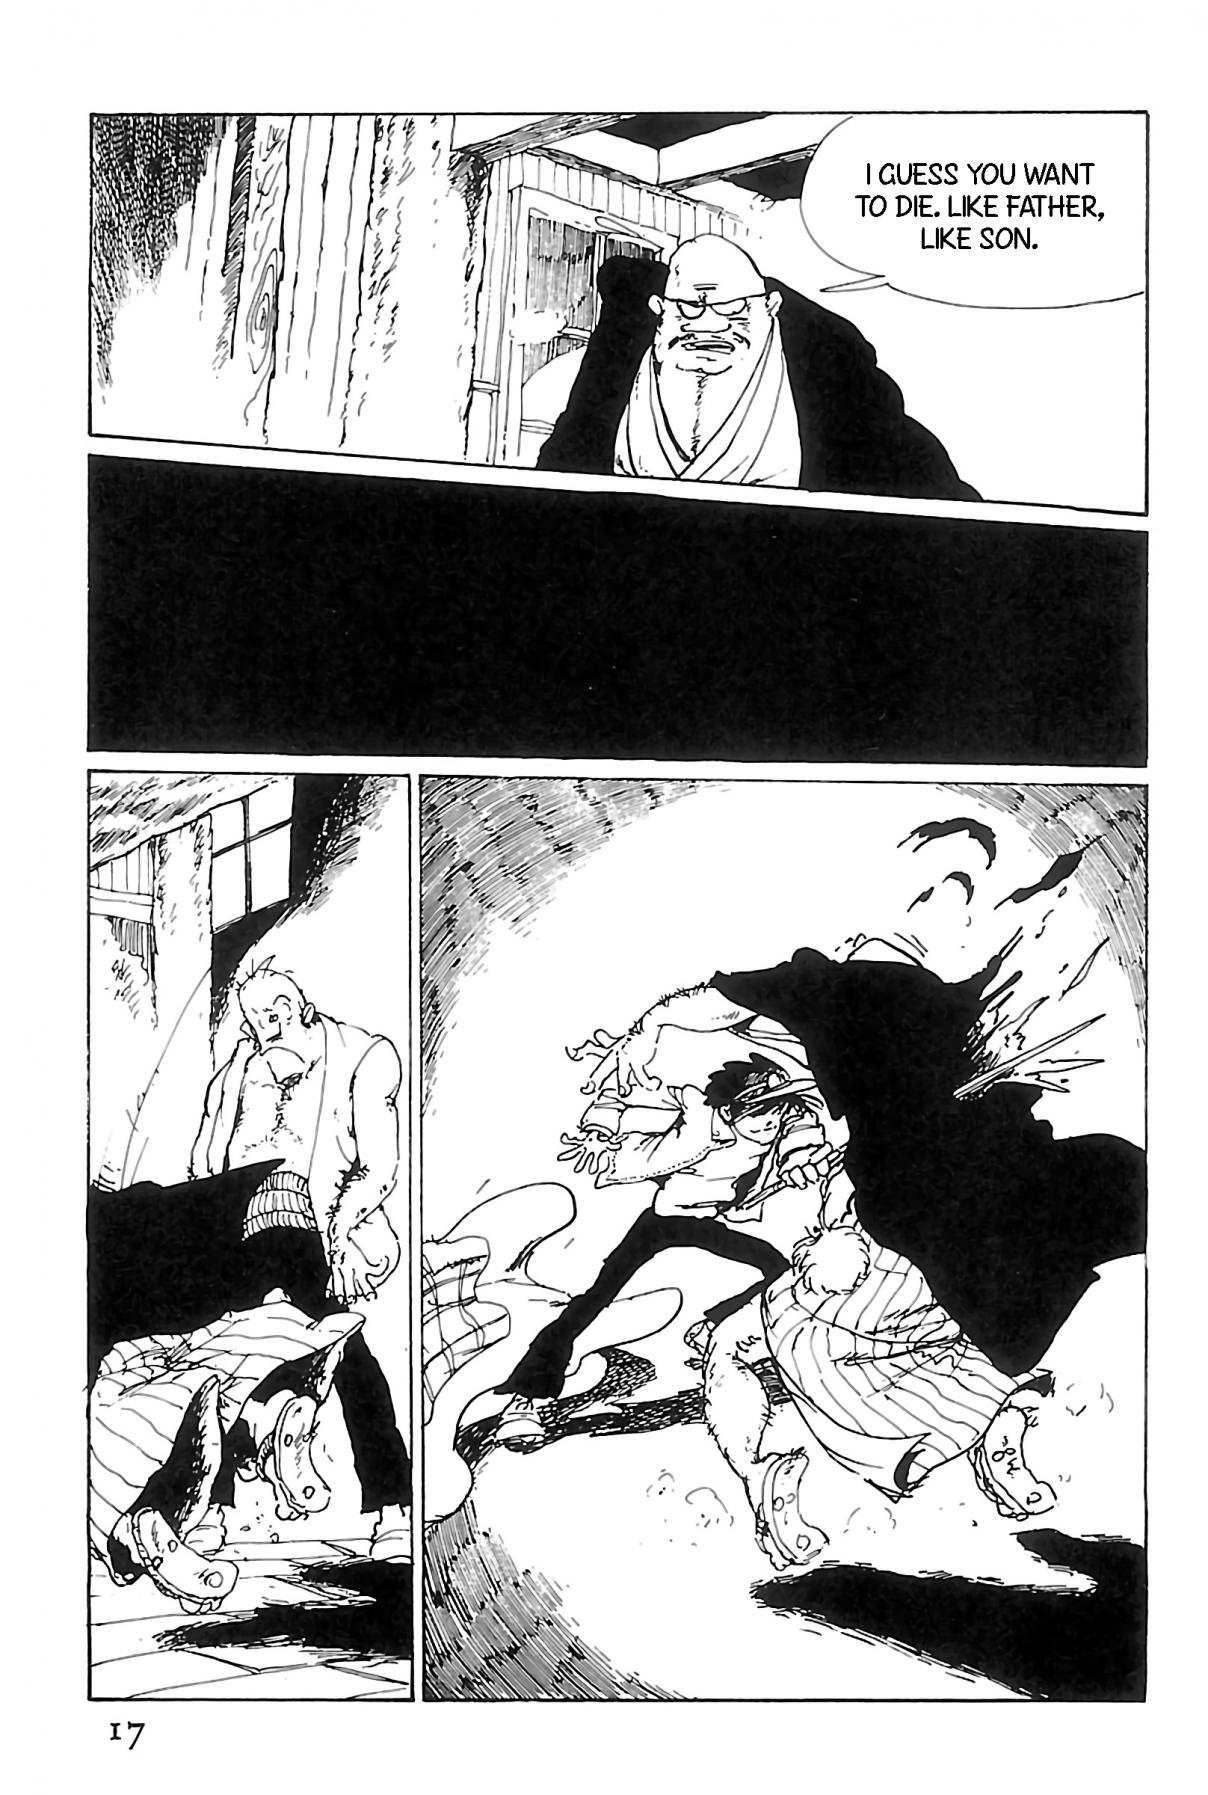 Shin Lupin III Vol. 9 Ch. 99 Hardened Steel